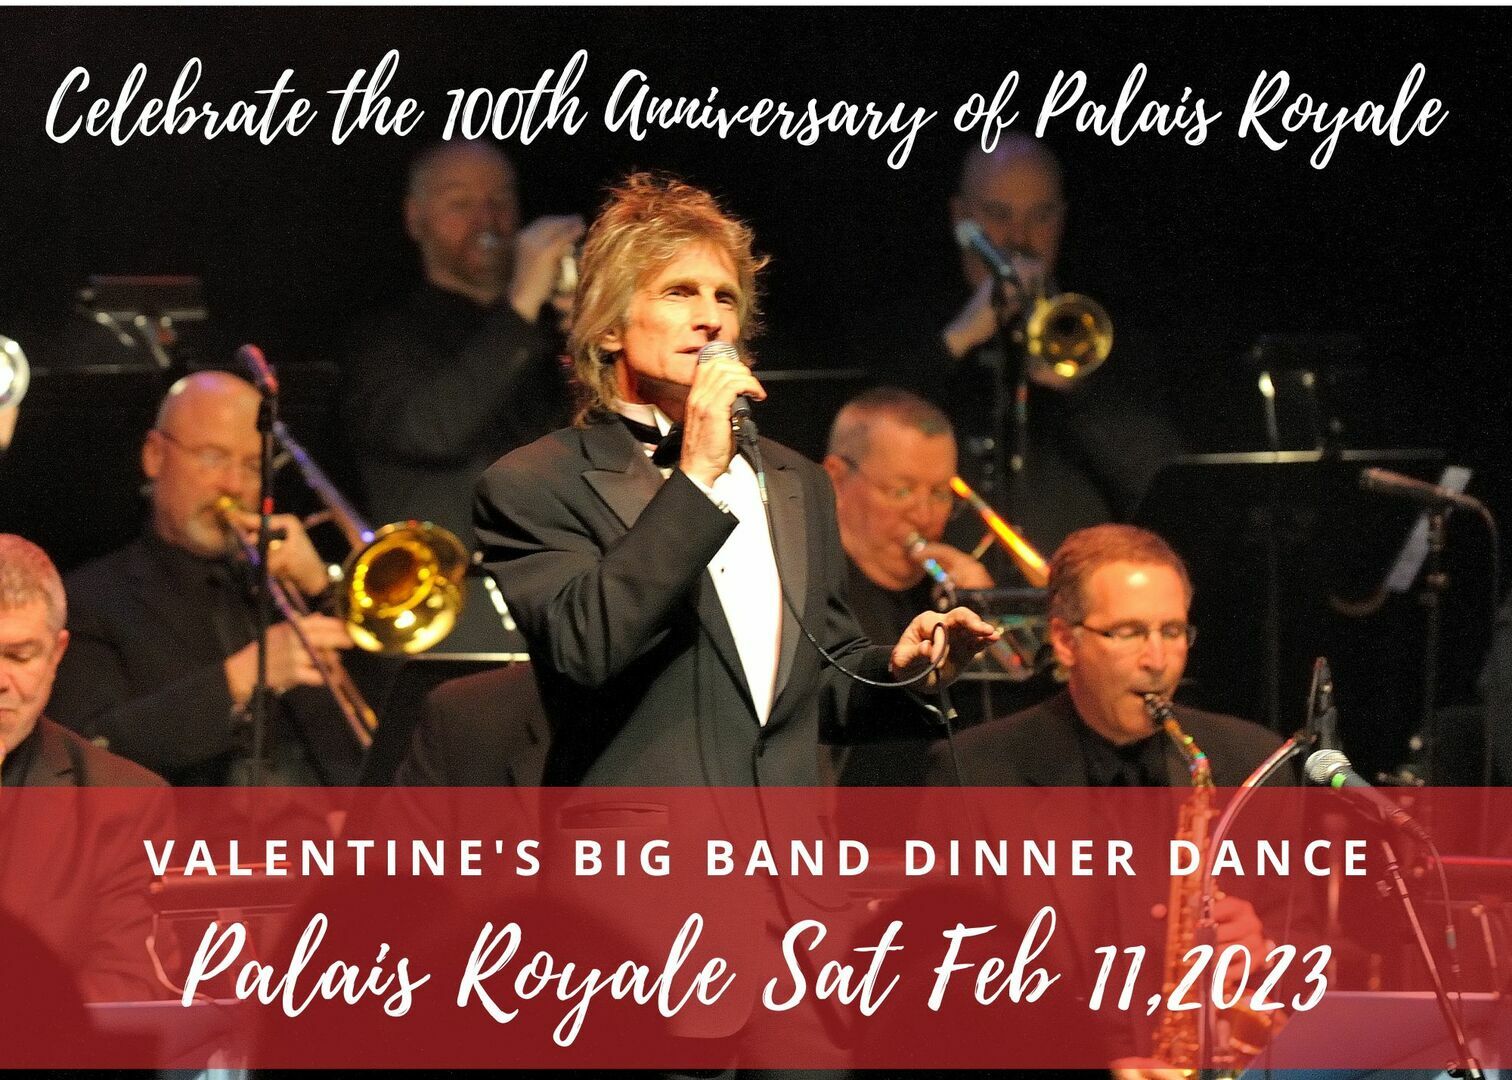 Valentine's Big Band Dinner Dance - February 11th 2023 - Palais Royale - Sinatra, Glenn Miller...., Toronto, Ontario, Canada